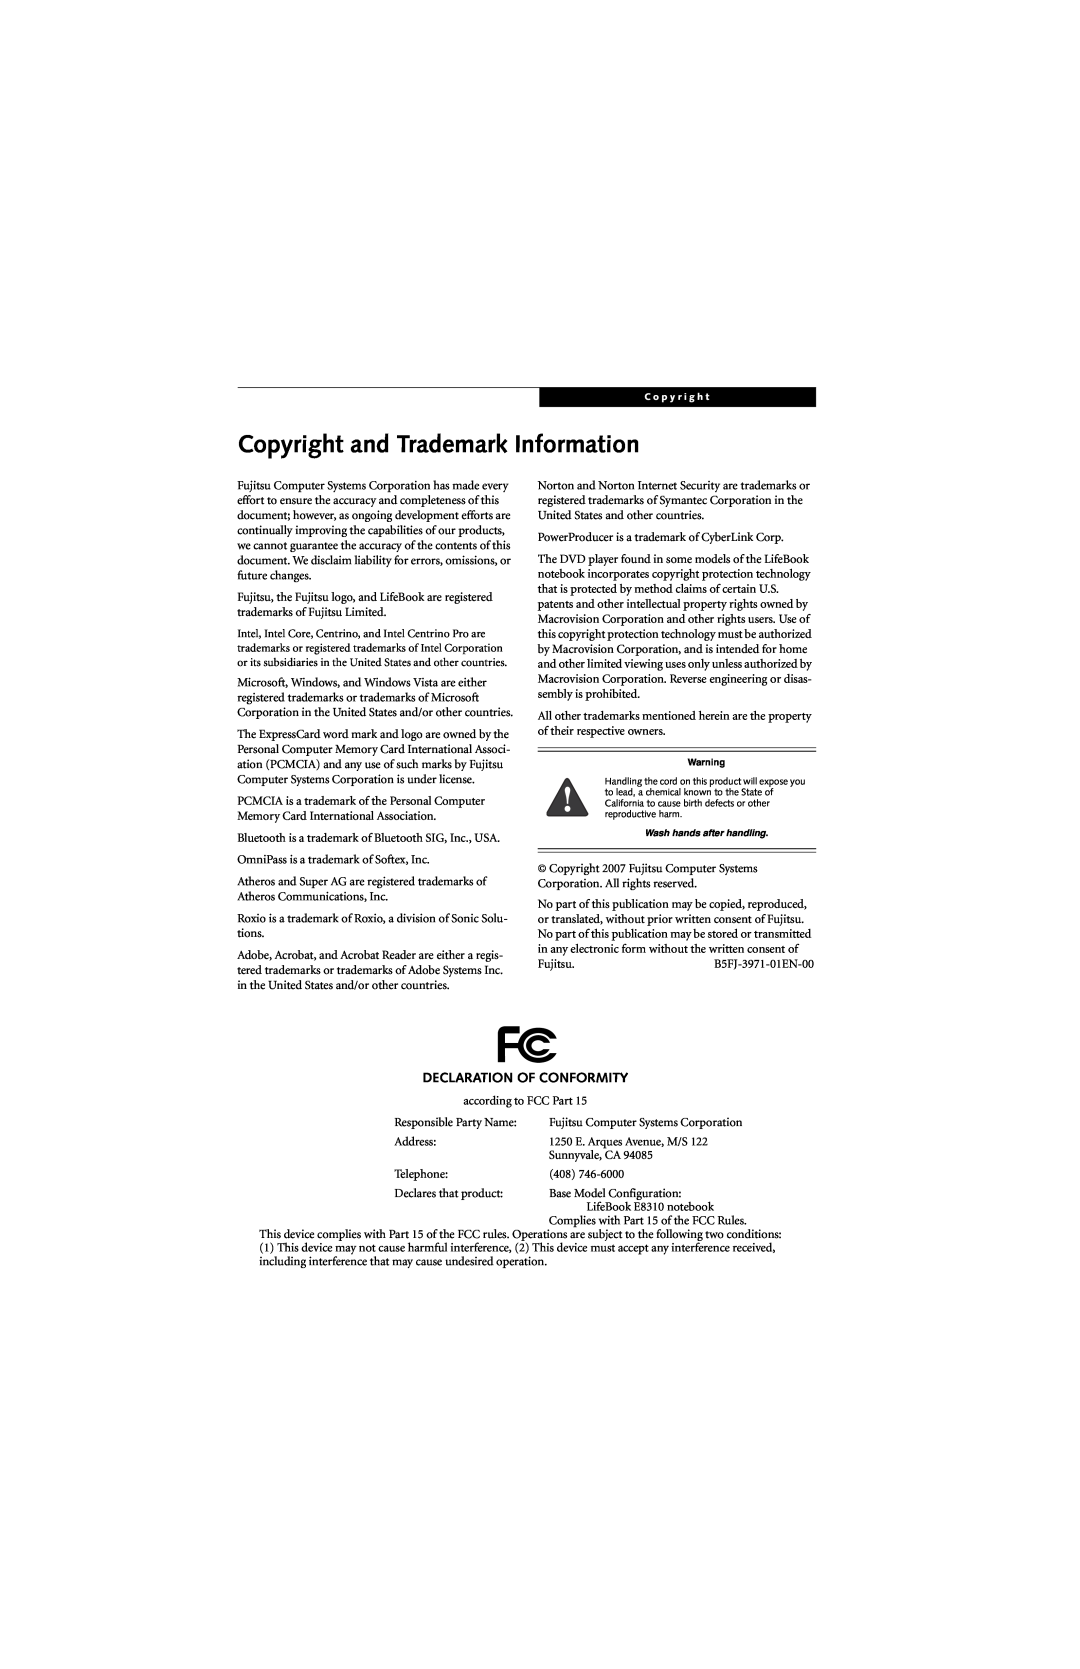 Fujitsu E8310 manual Copyright and Trademark Information, Declaration Of Conformity 